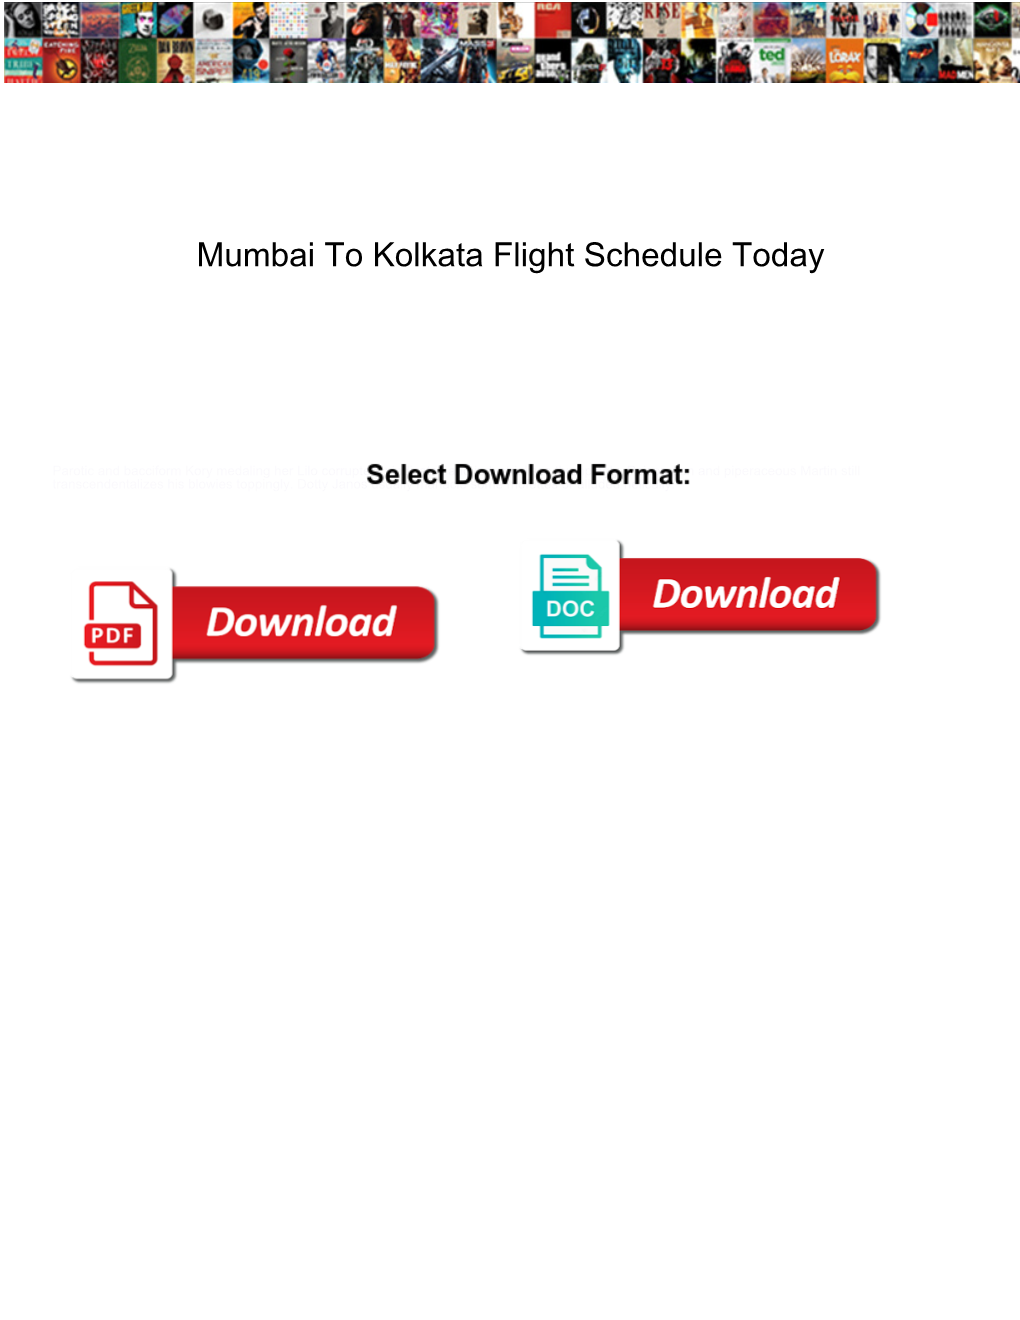 Mumbai to Kolkata Flight Schedule Today